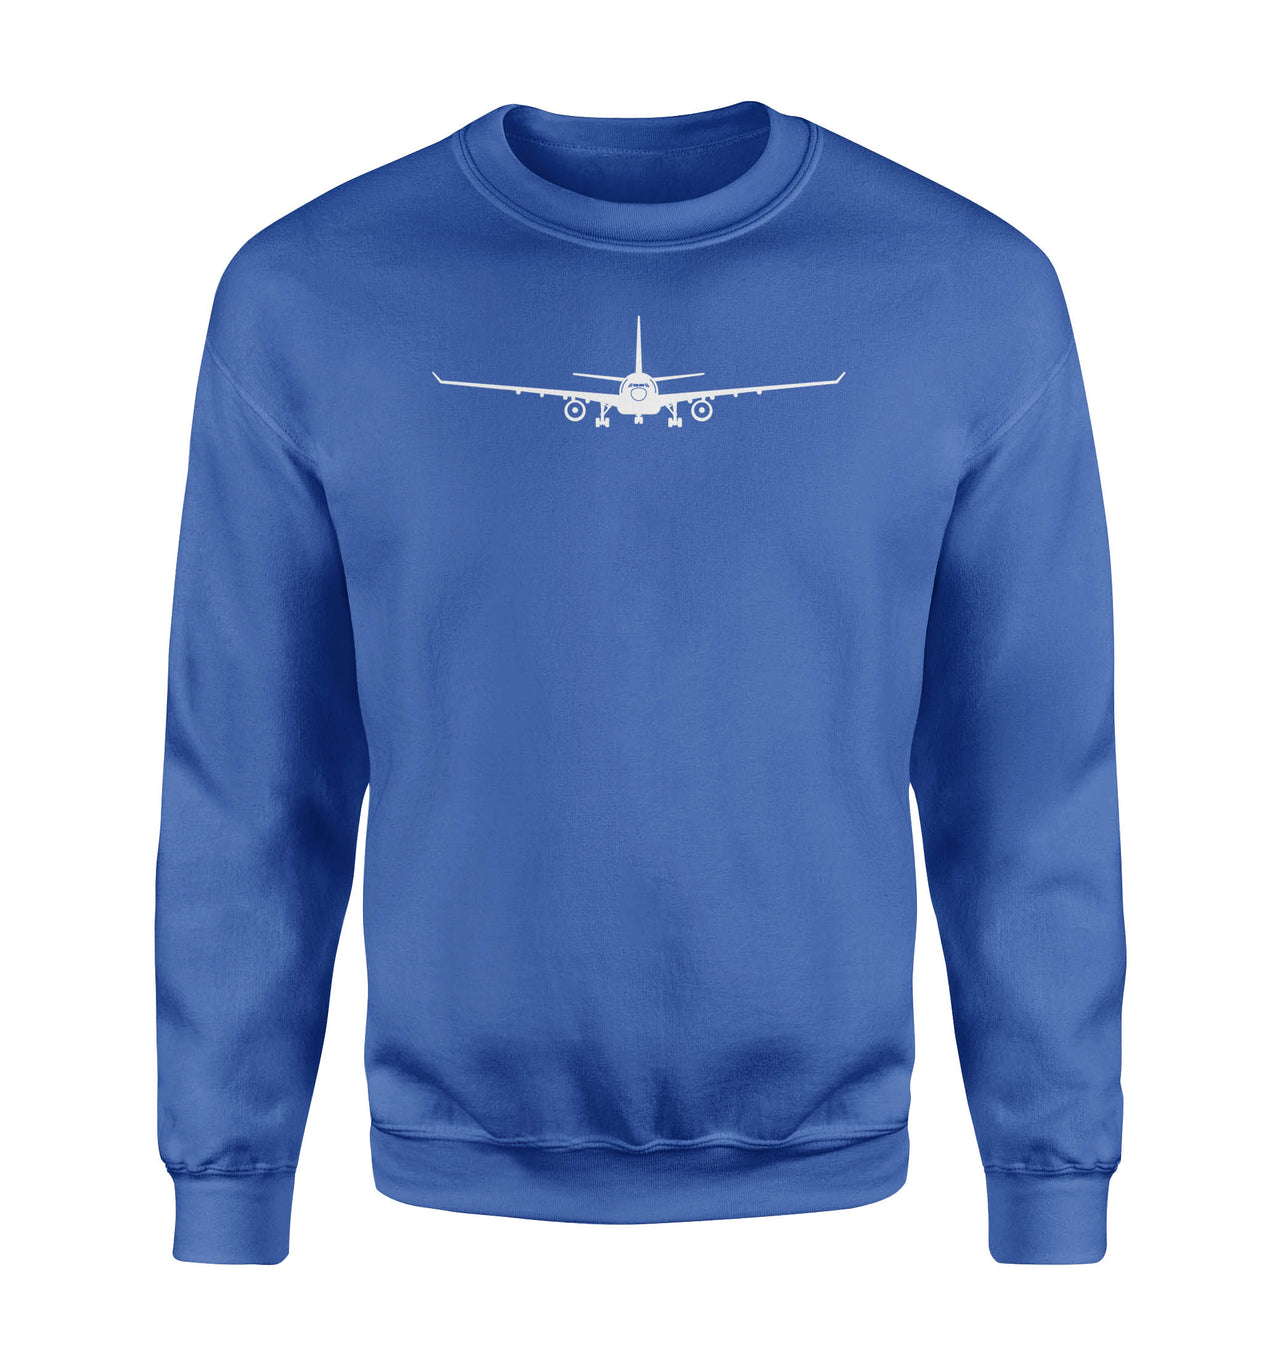 Airbus A330 Silhouette Designed Sweatshirts